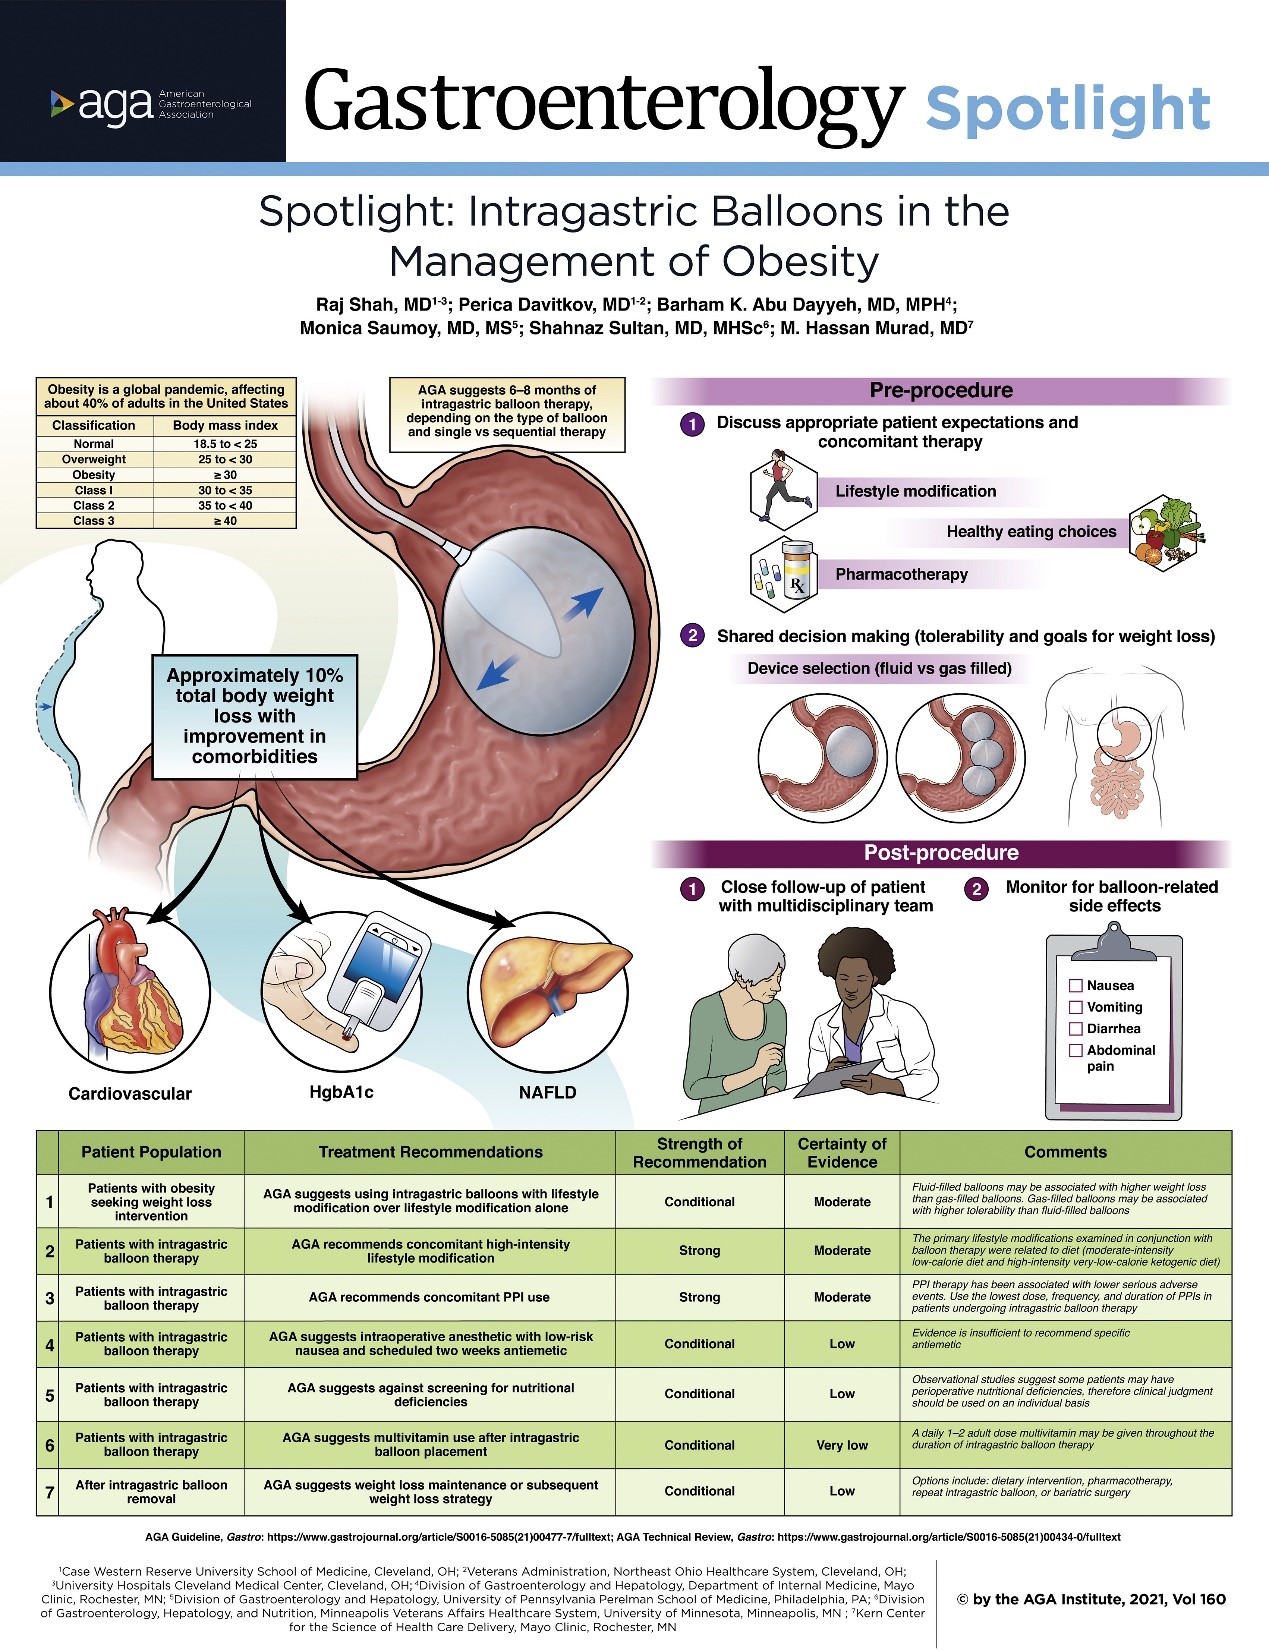 Gastroenterology：美国<font color="red">胃肠病</font>学协会发布有关使用胃内球囊治疗肥胖症的正式建议